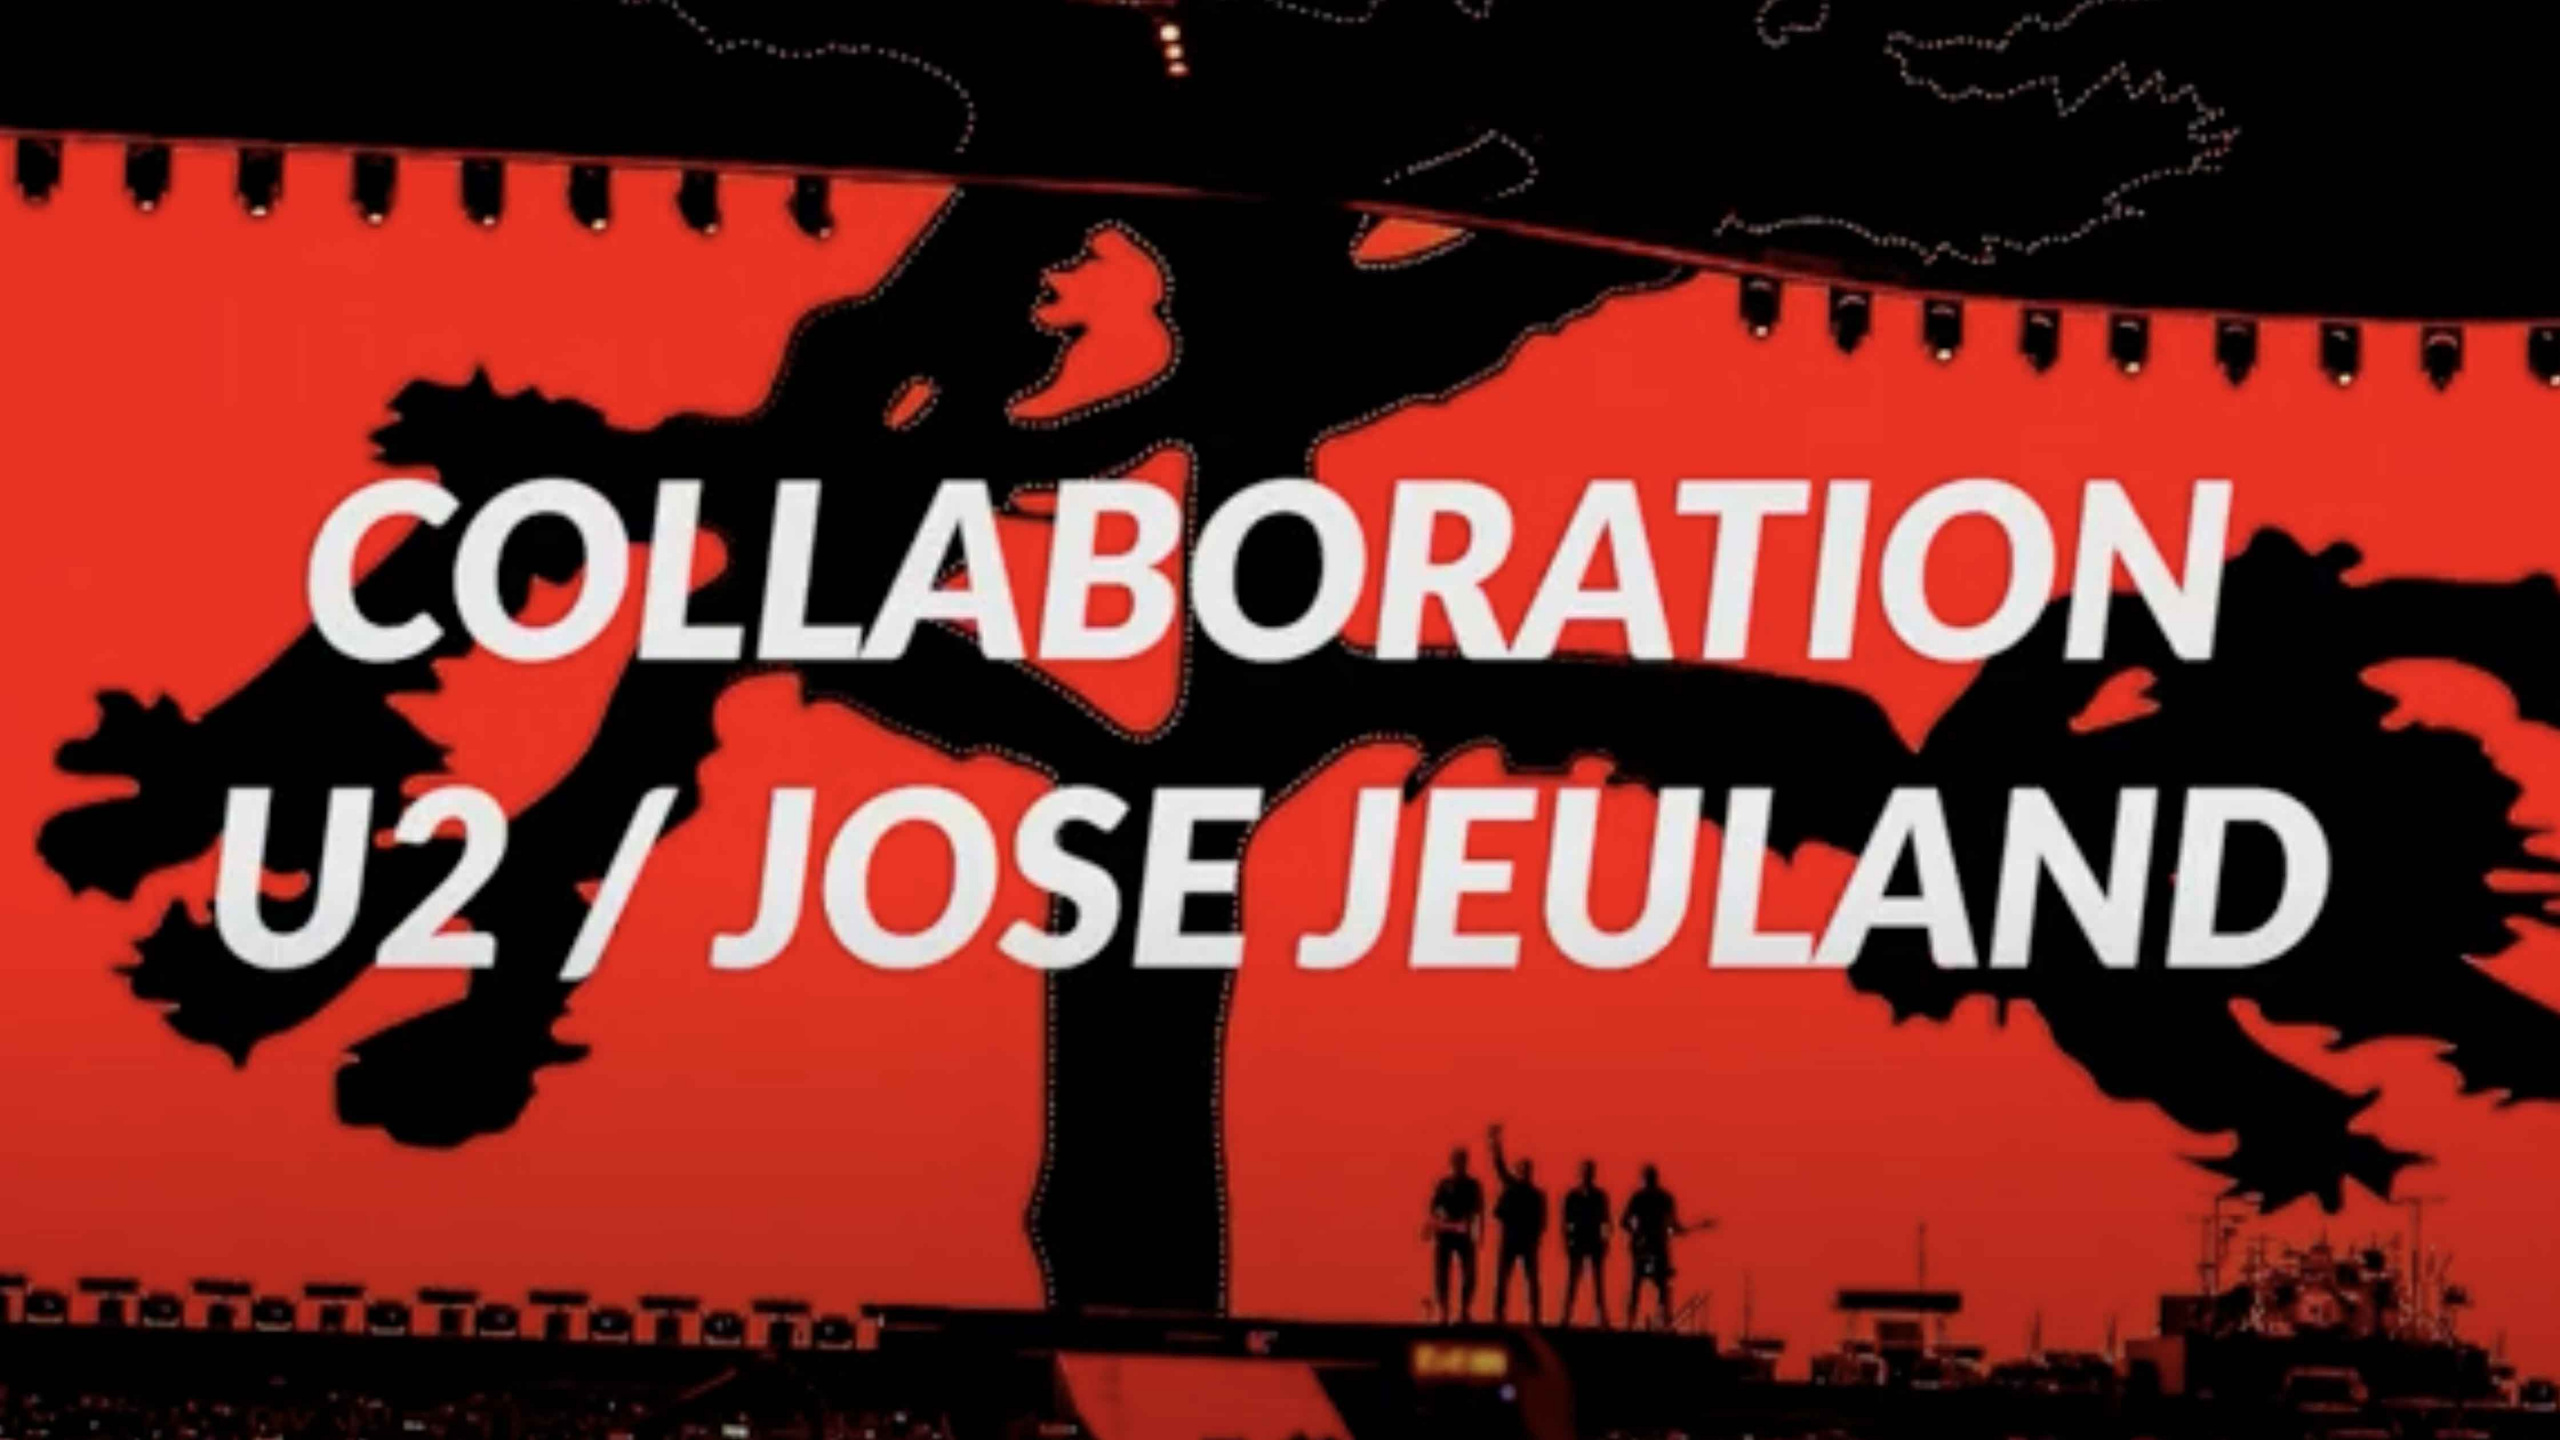 Screenshot U2 band collaboration with Jose jeuland photographer video production company in singapore coco creative studio